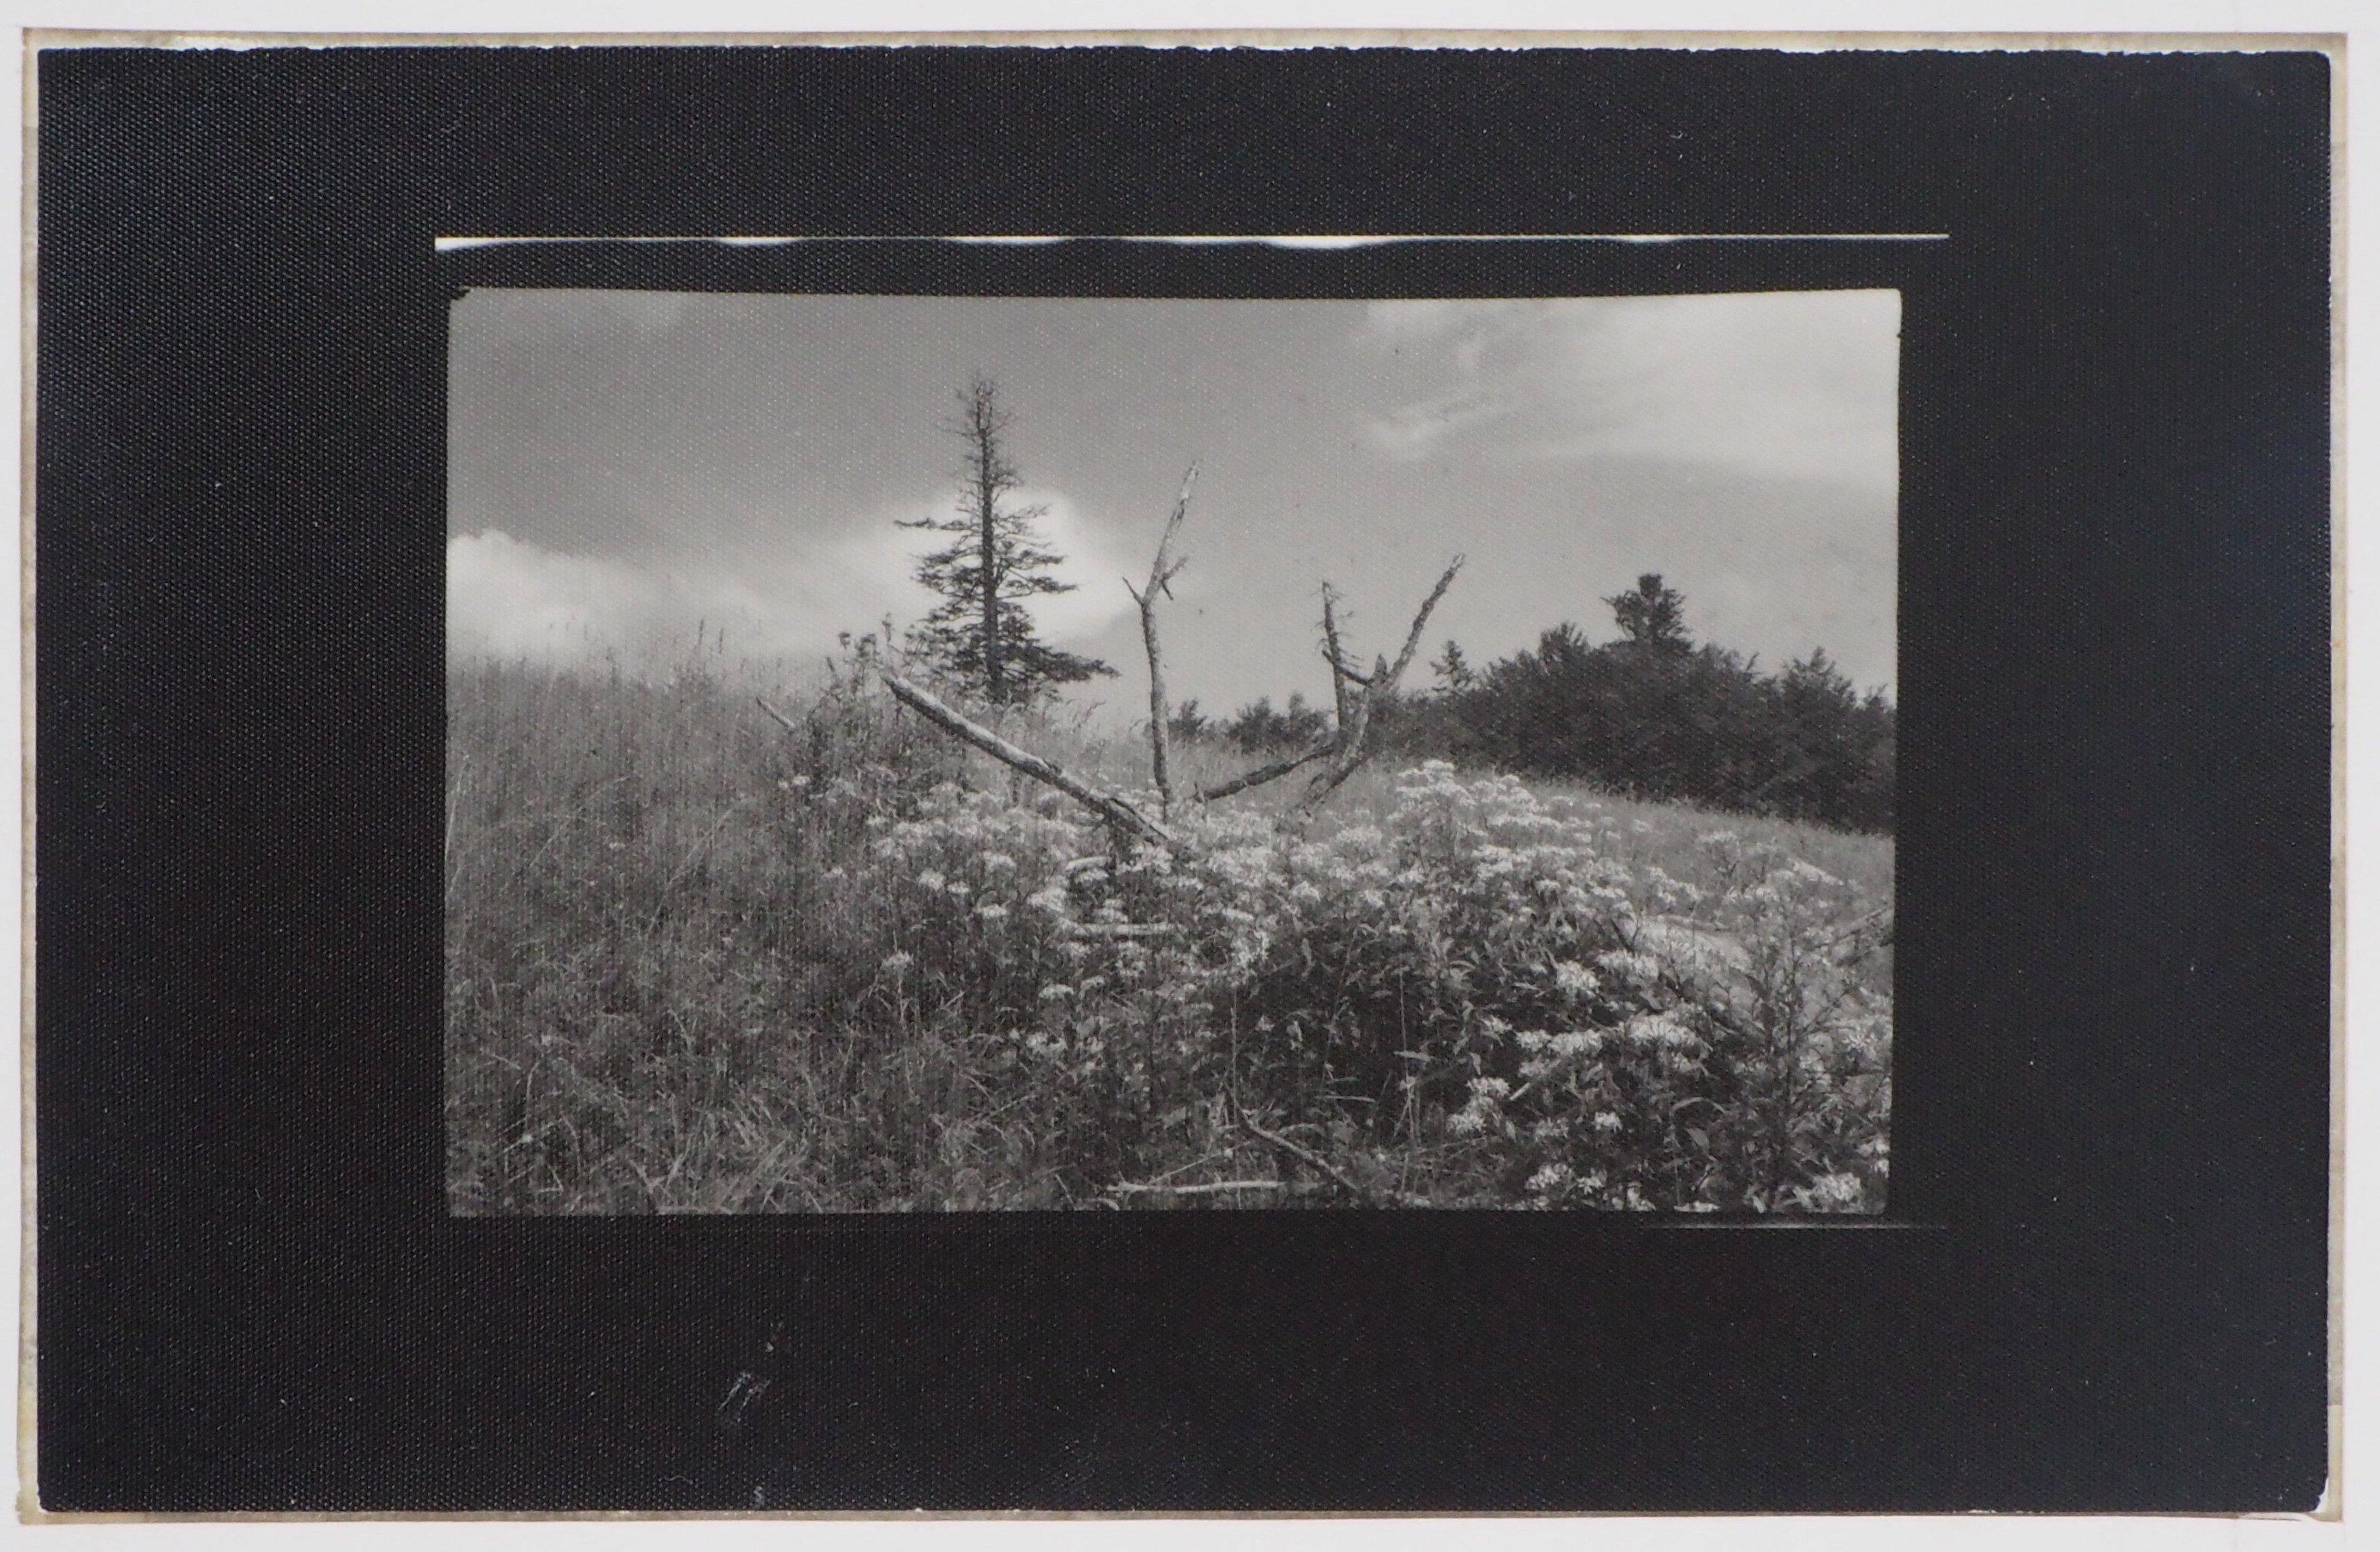 Josef Sudek Landscape Photograph - Forest of Mionsi 17 - Original Gelatin Silver Photograph, 1962